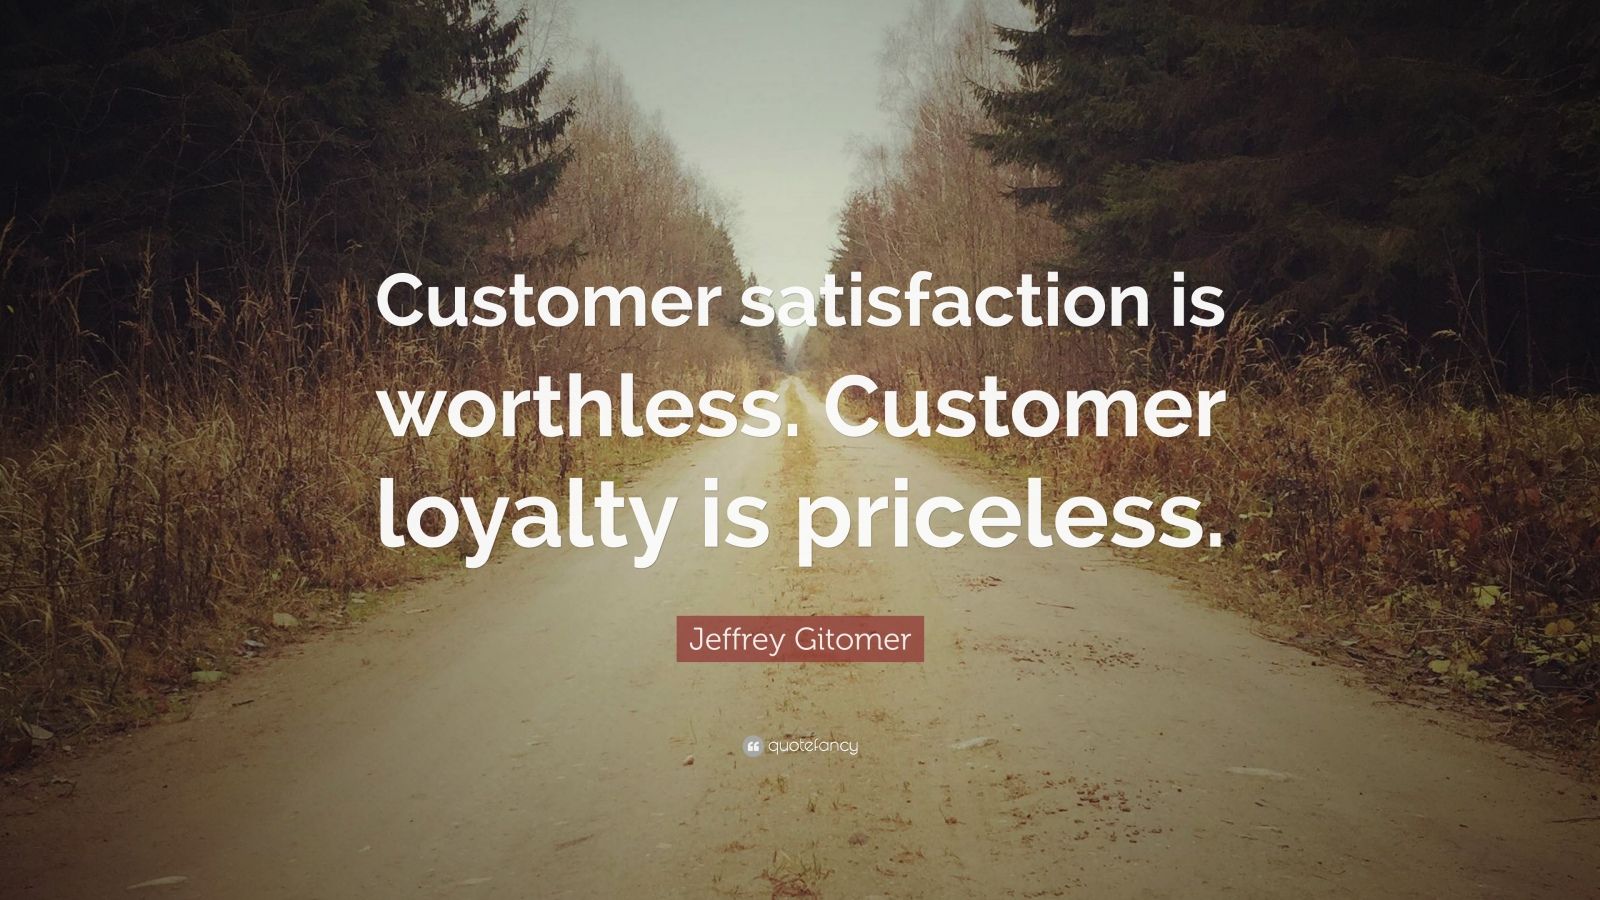 Jeffrey Gitomer Quote: “Customer satisfaction is worthless. Customer